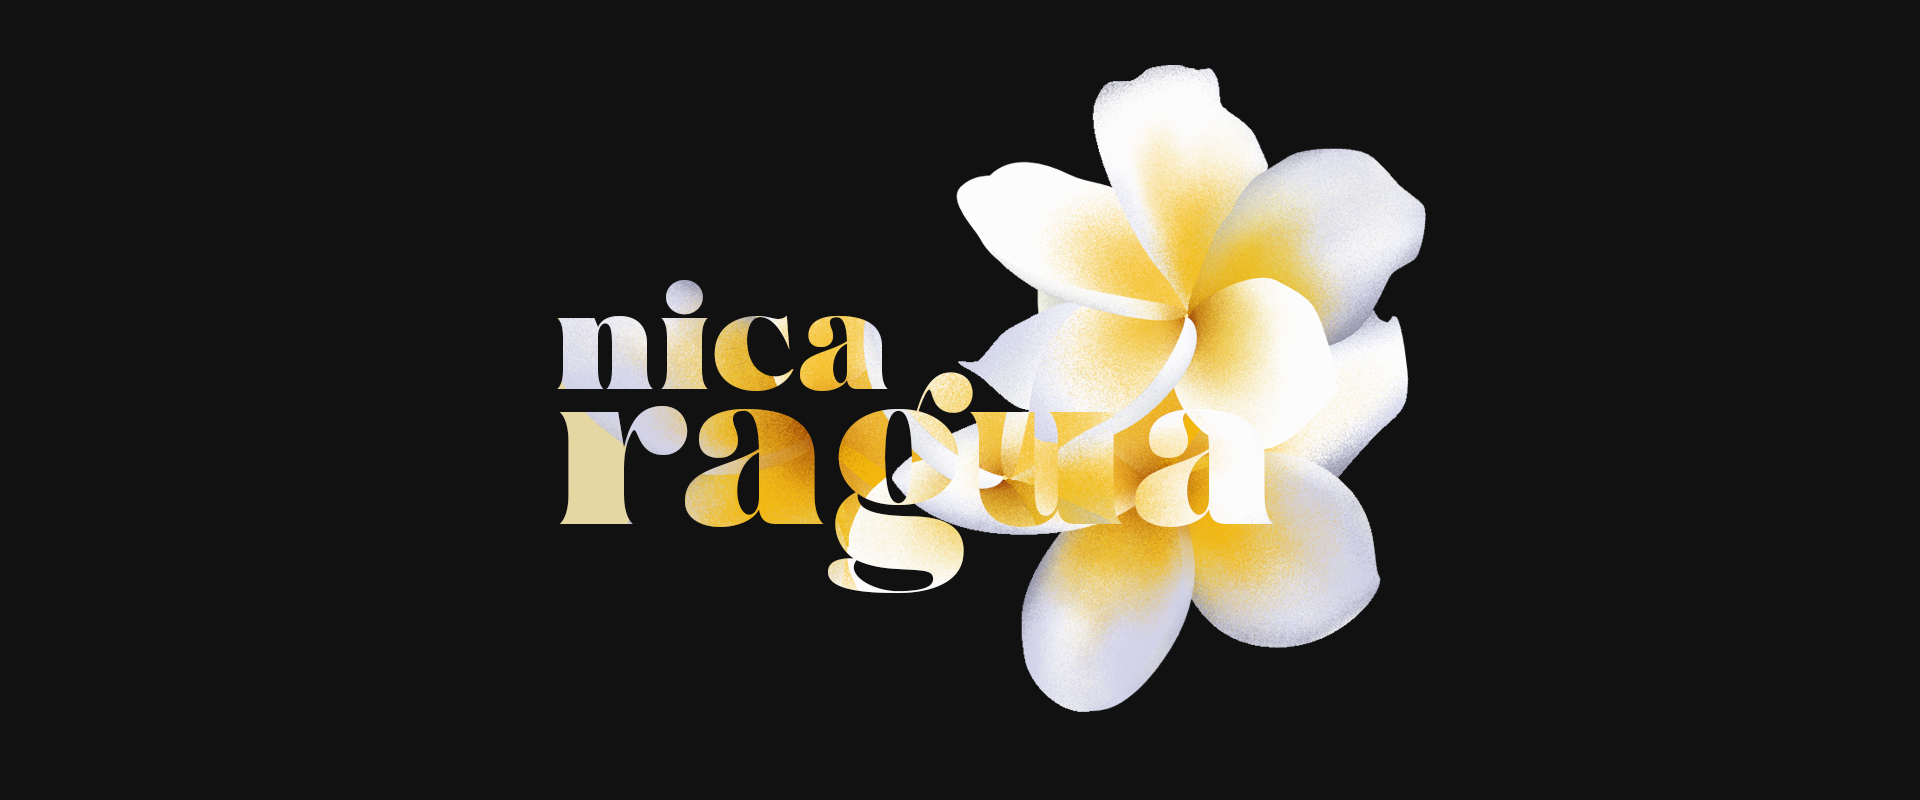 Sacuanjoche flower representing Nicaragua